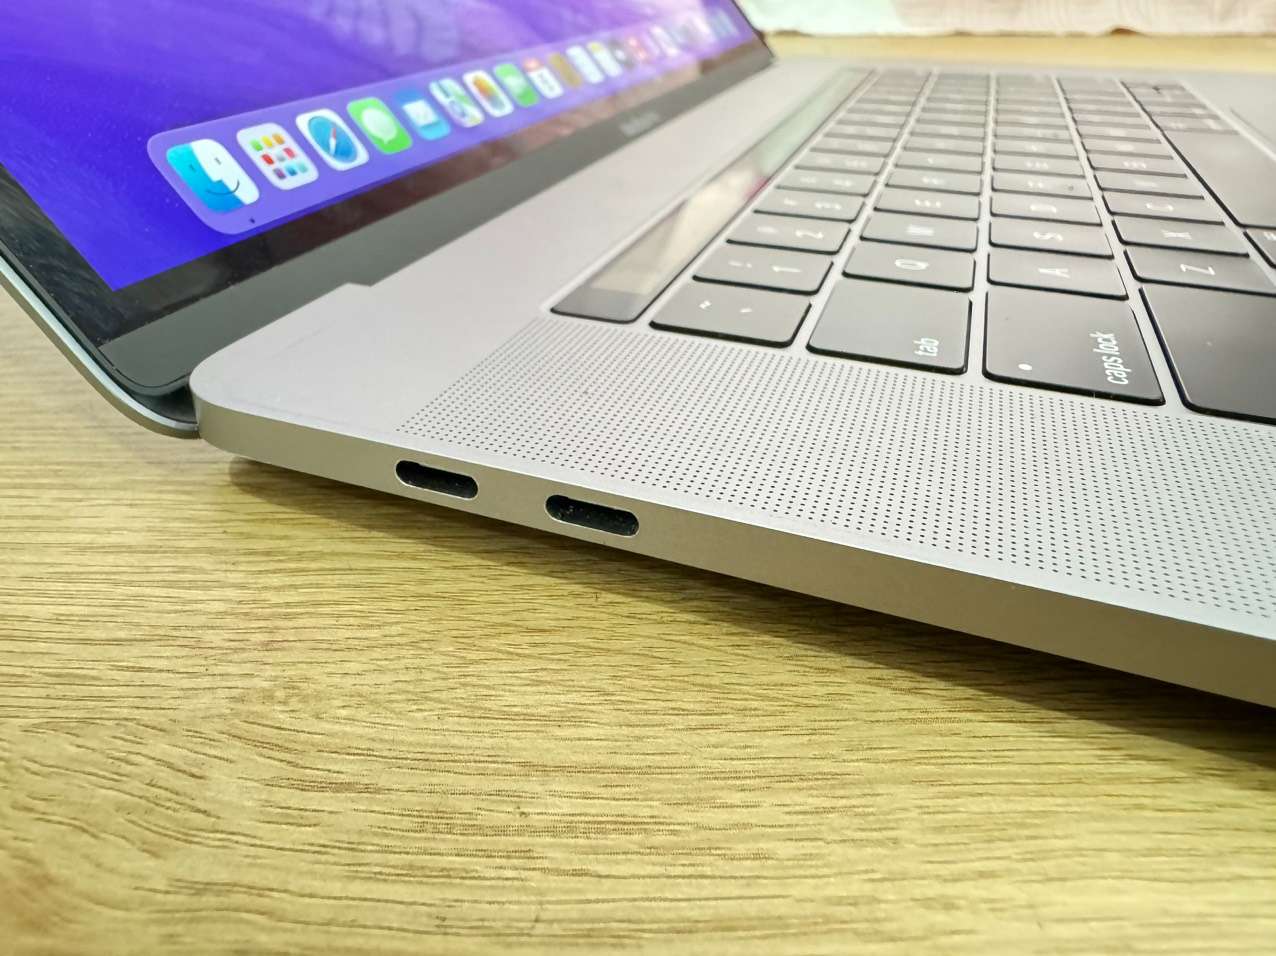 Macbook-pro-15-inch-2018-core-i7-ram-16gb-ssd-500gb-vga-like-new-4